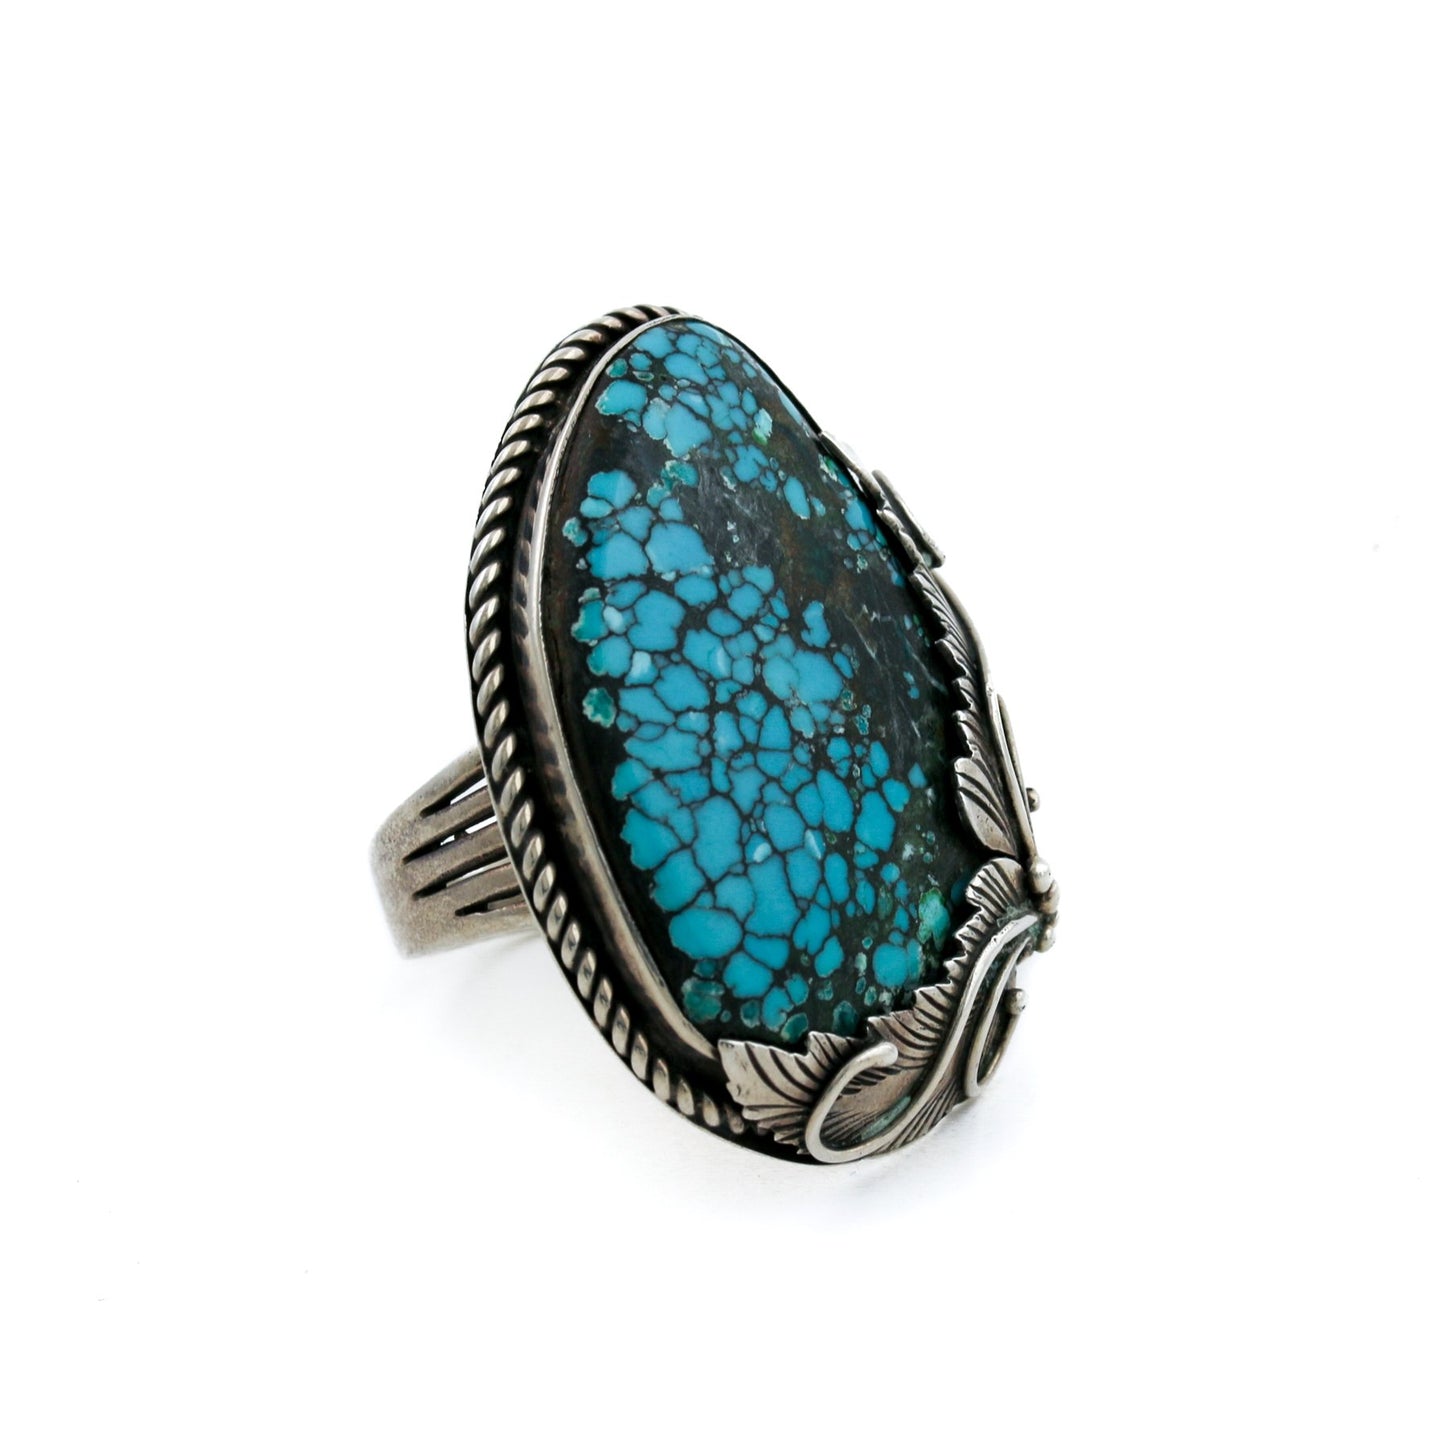 Vintage American Turquoise Ring - Leaf Motif - Kingdom Jewelry